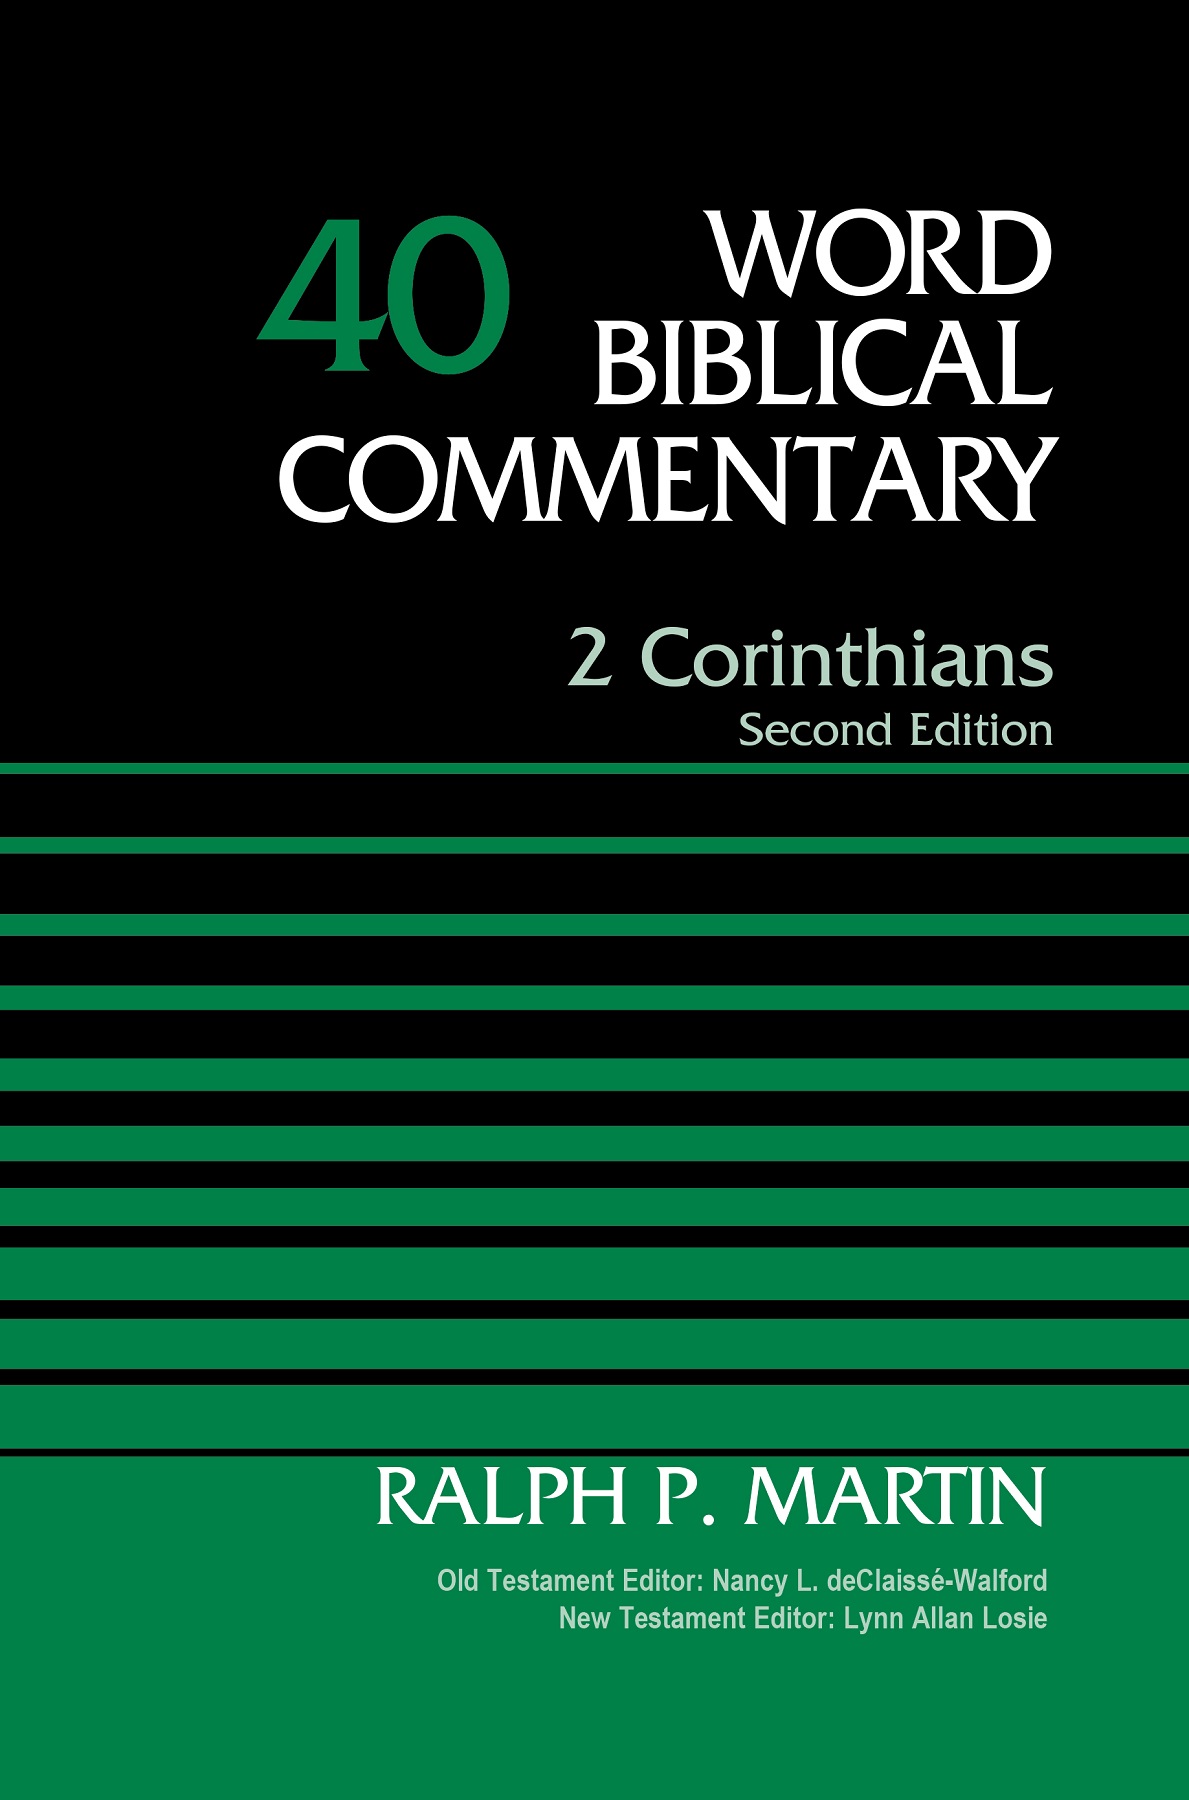 Word Biblical Commentary Volume 40 2 Corinthians Second Edition Ralph P Martin - photo 1